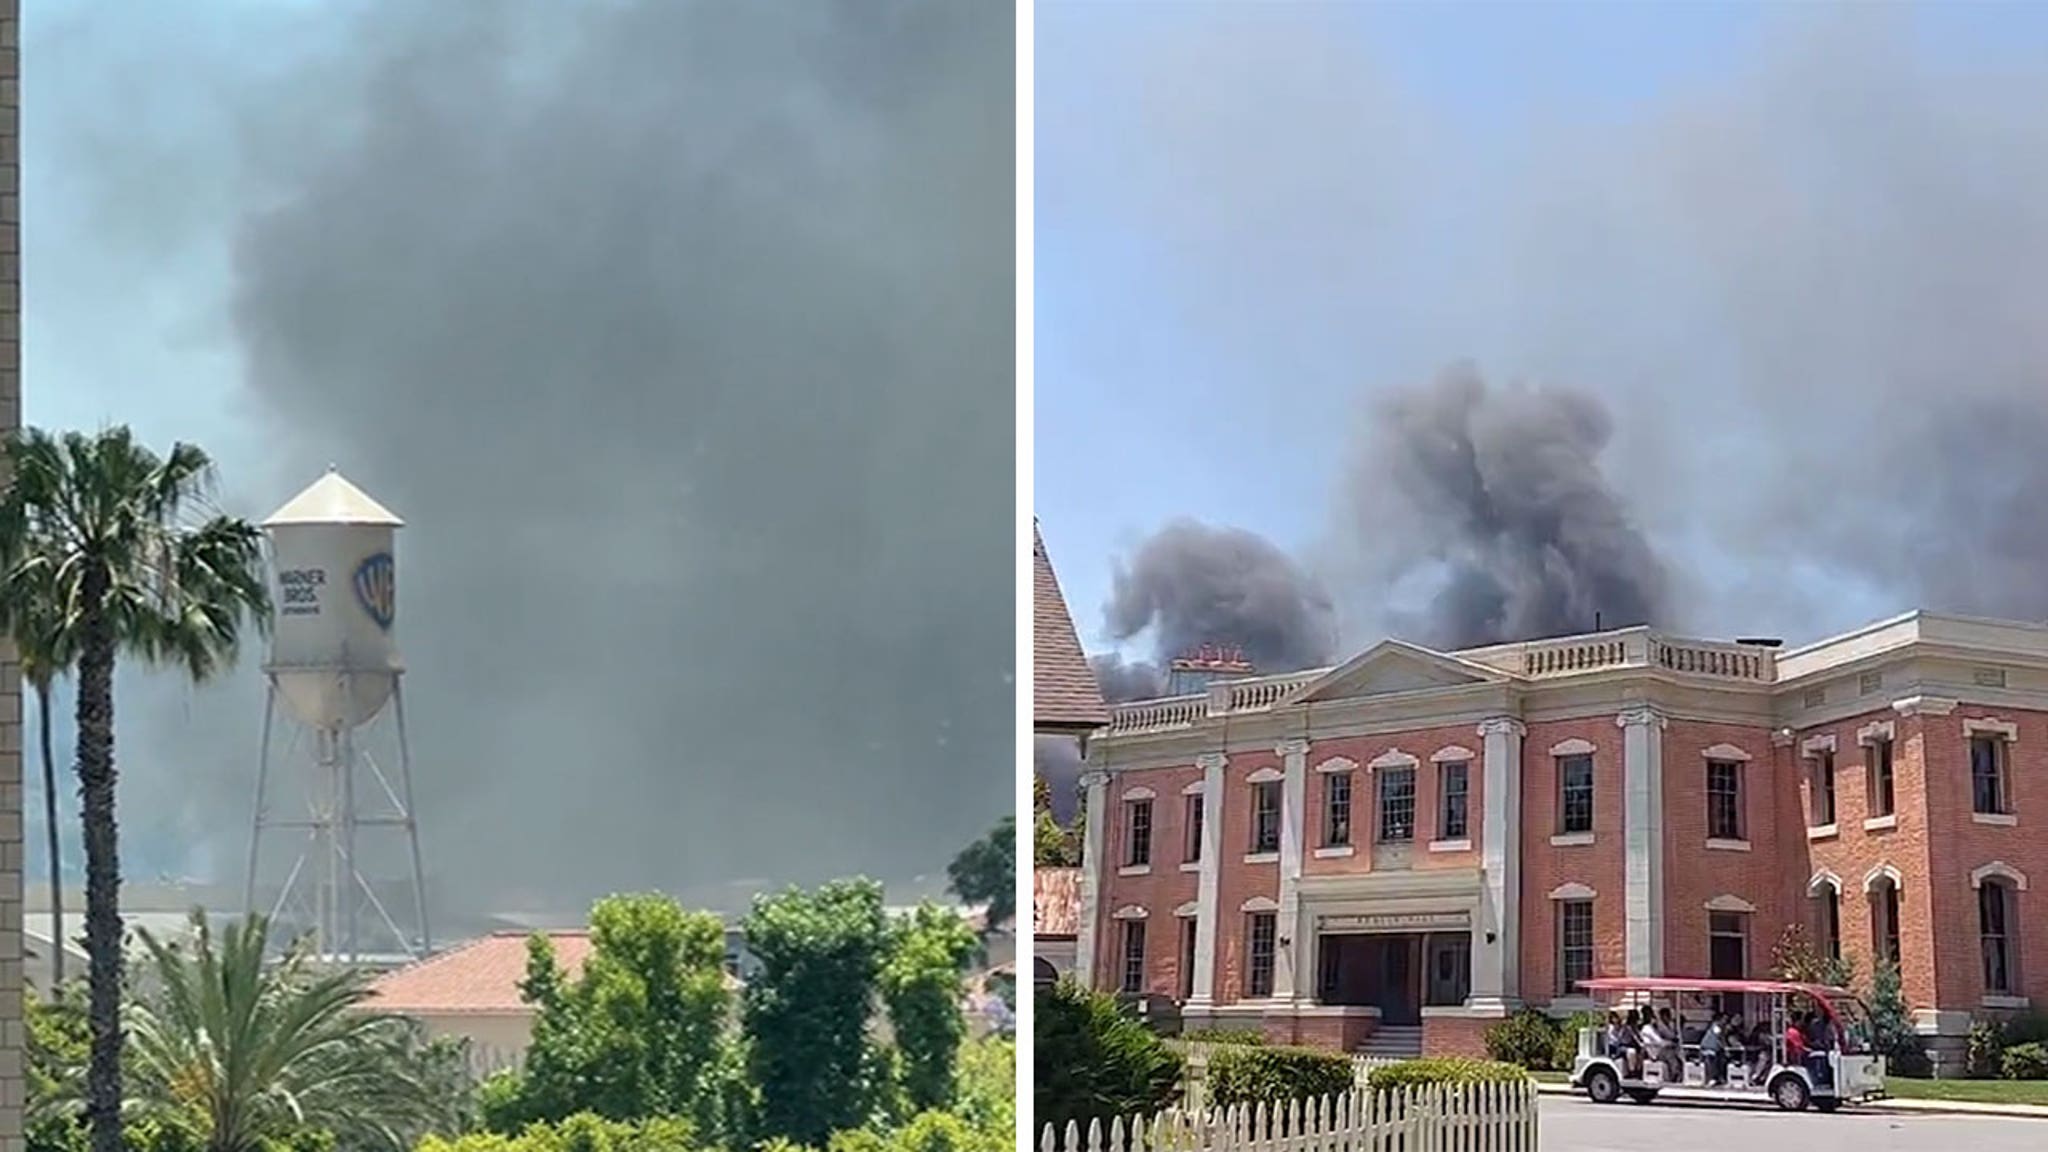 Fire Breaks Out on Warner Brothers Studio Lot, Black Smoke Fills Air